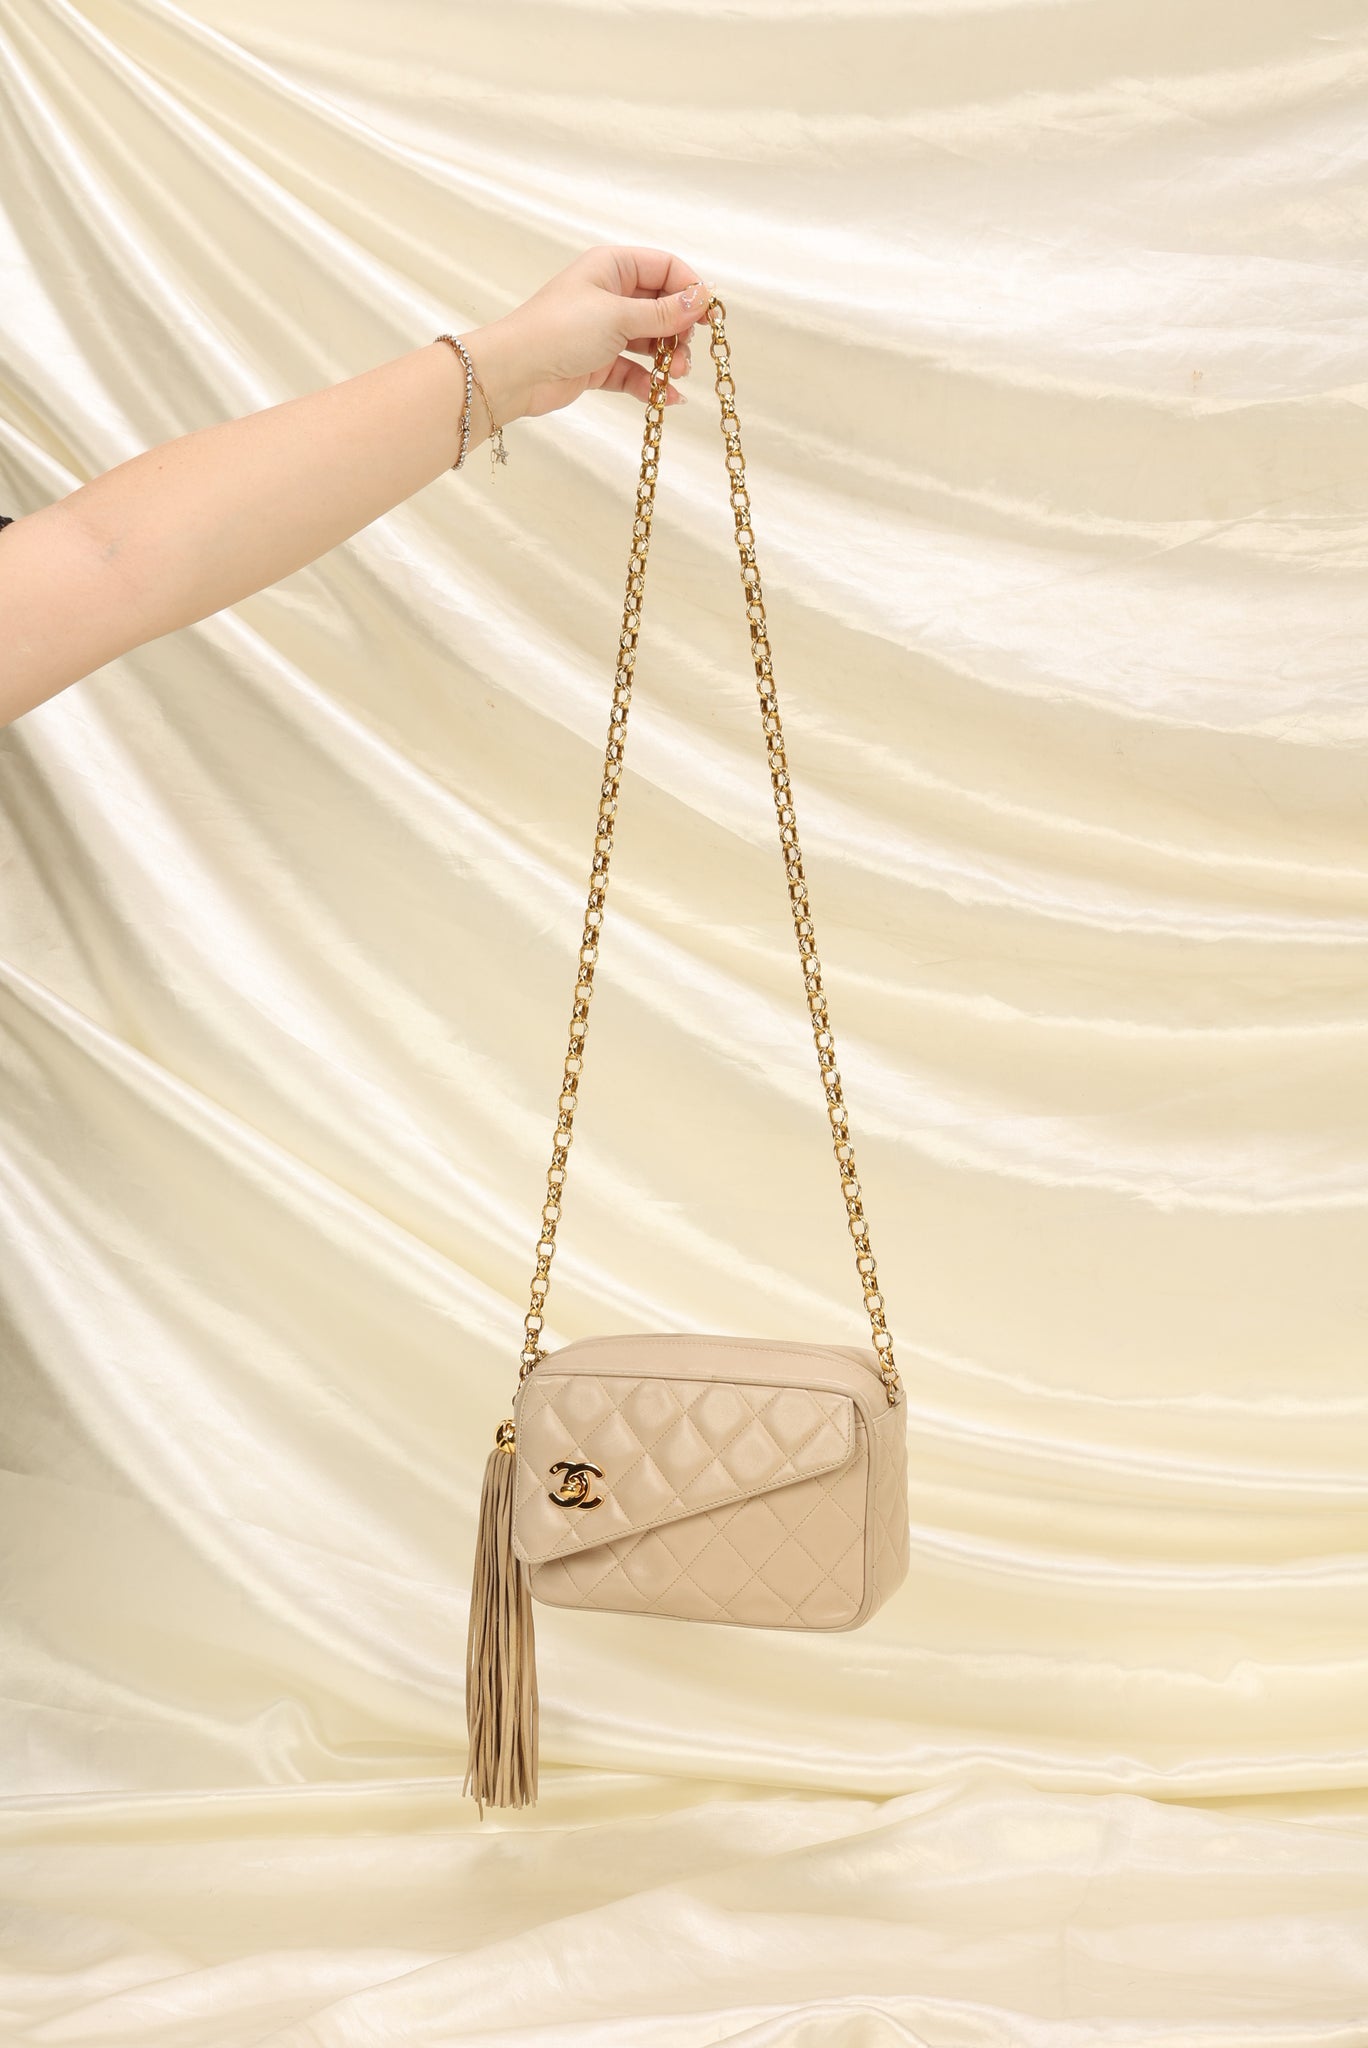 chanel gold chain handbag